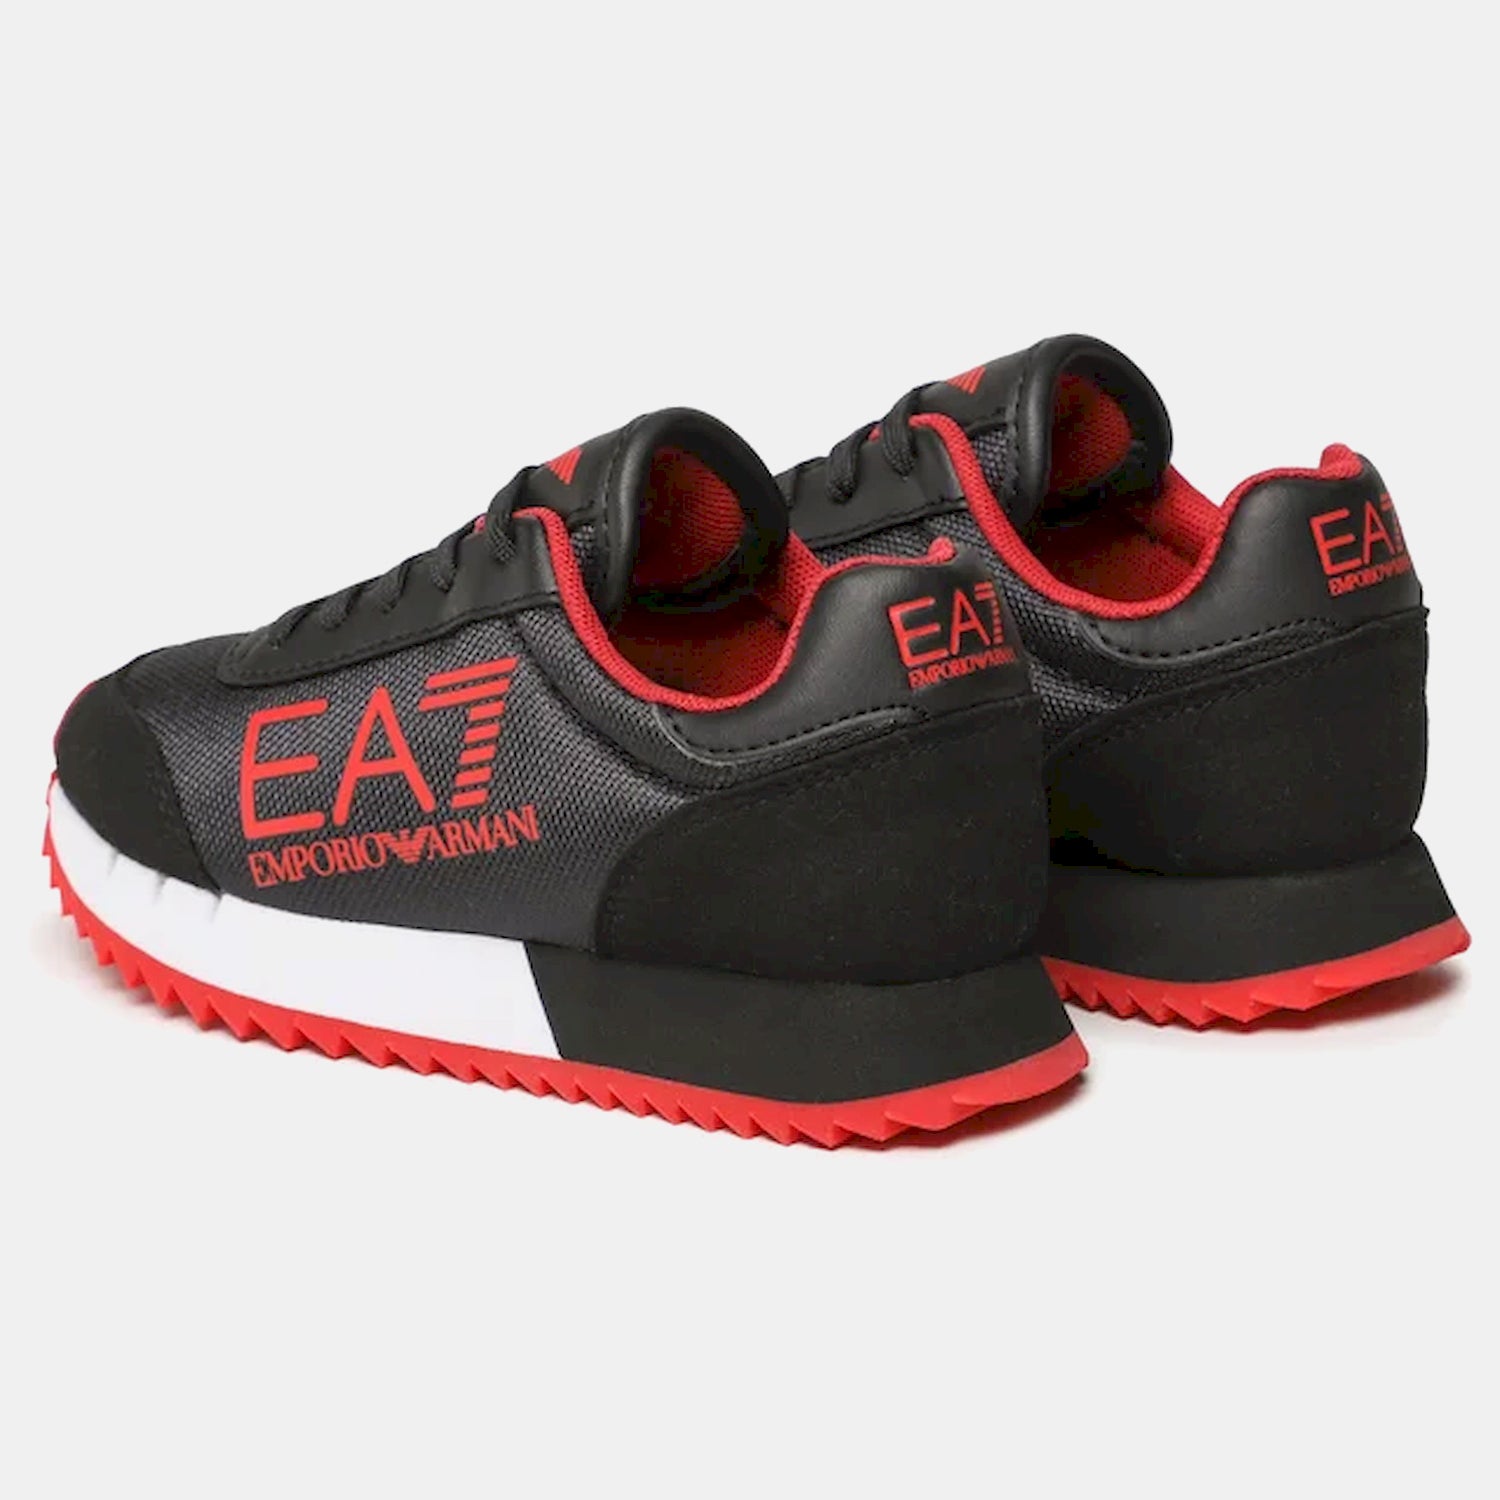 Emporio Armani Ea7 Sapatilhas Sneakers Shoes Xsx107 Xot56 Black Red Preto Vermelho_shot1